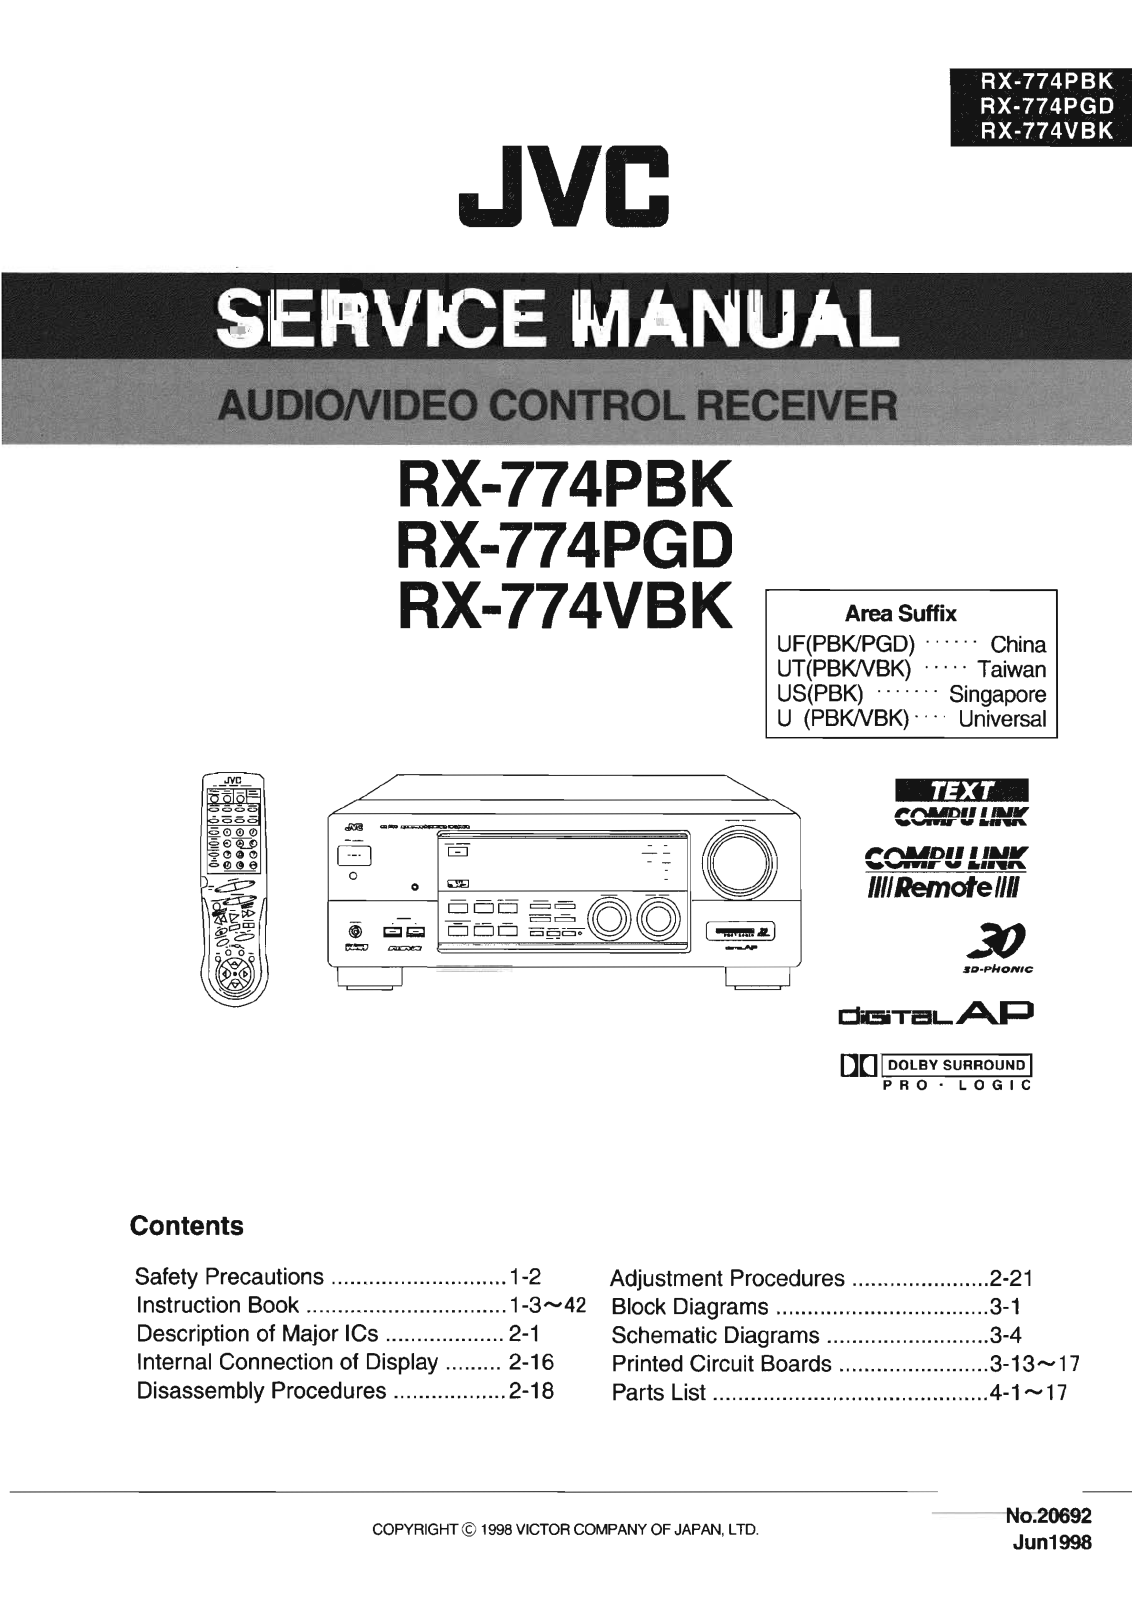 Jvc RX-774-VBK, RX-774-PGD, RX-774-PBK Service Manual